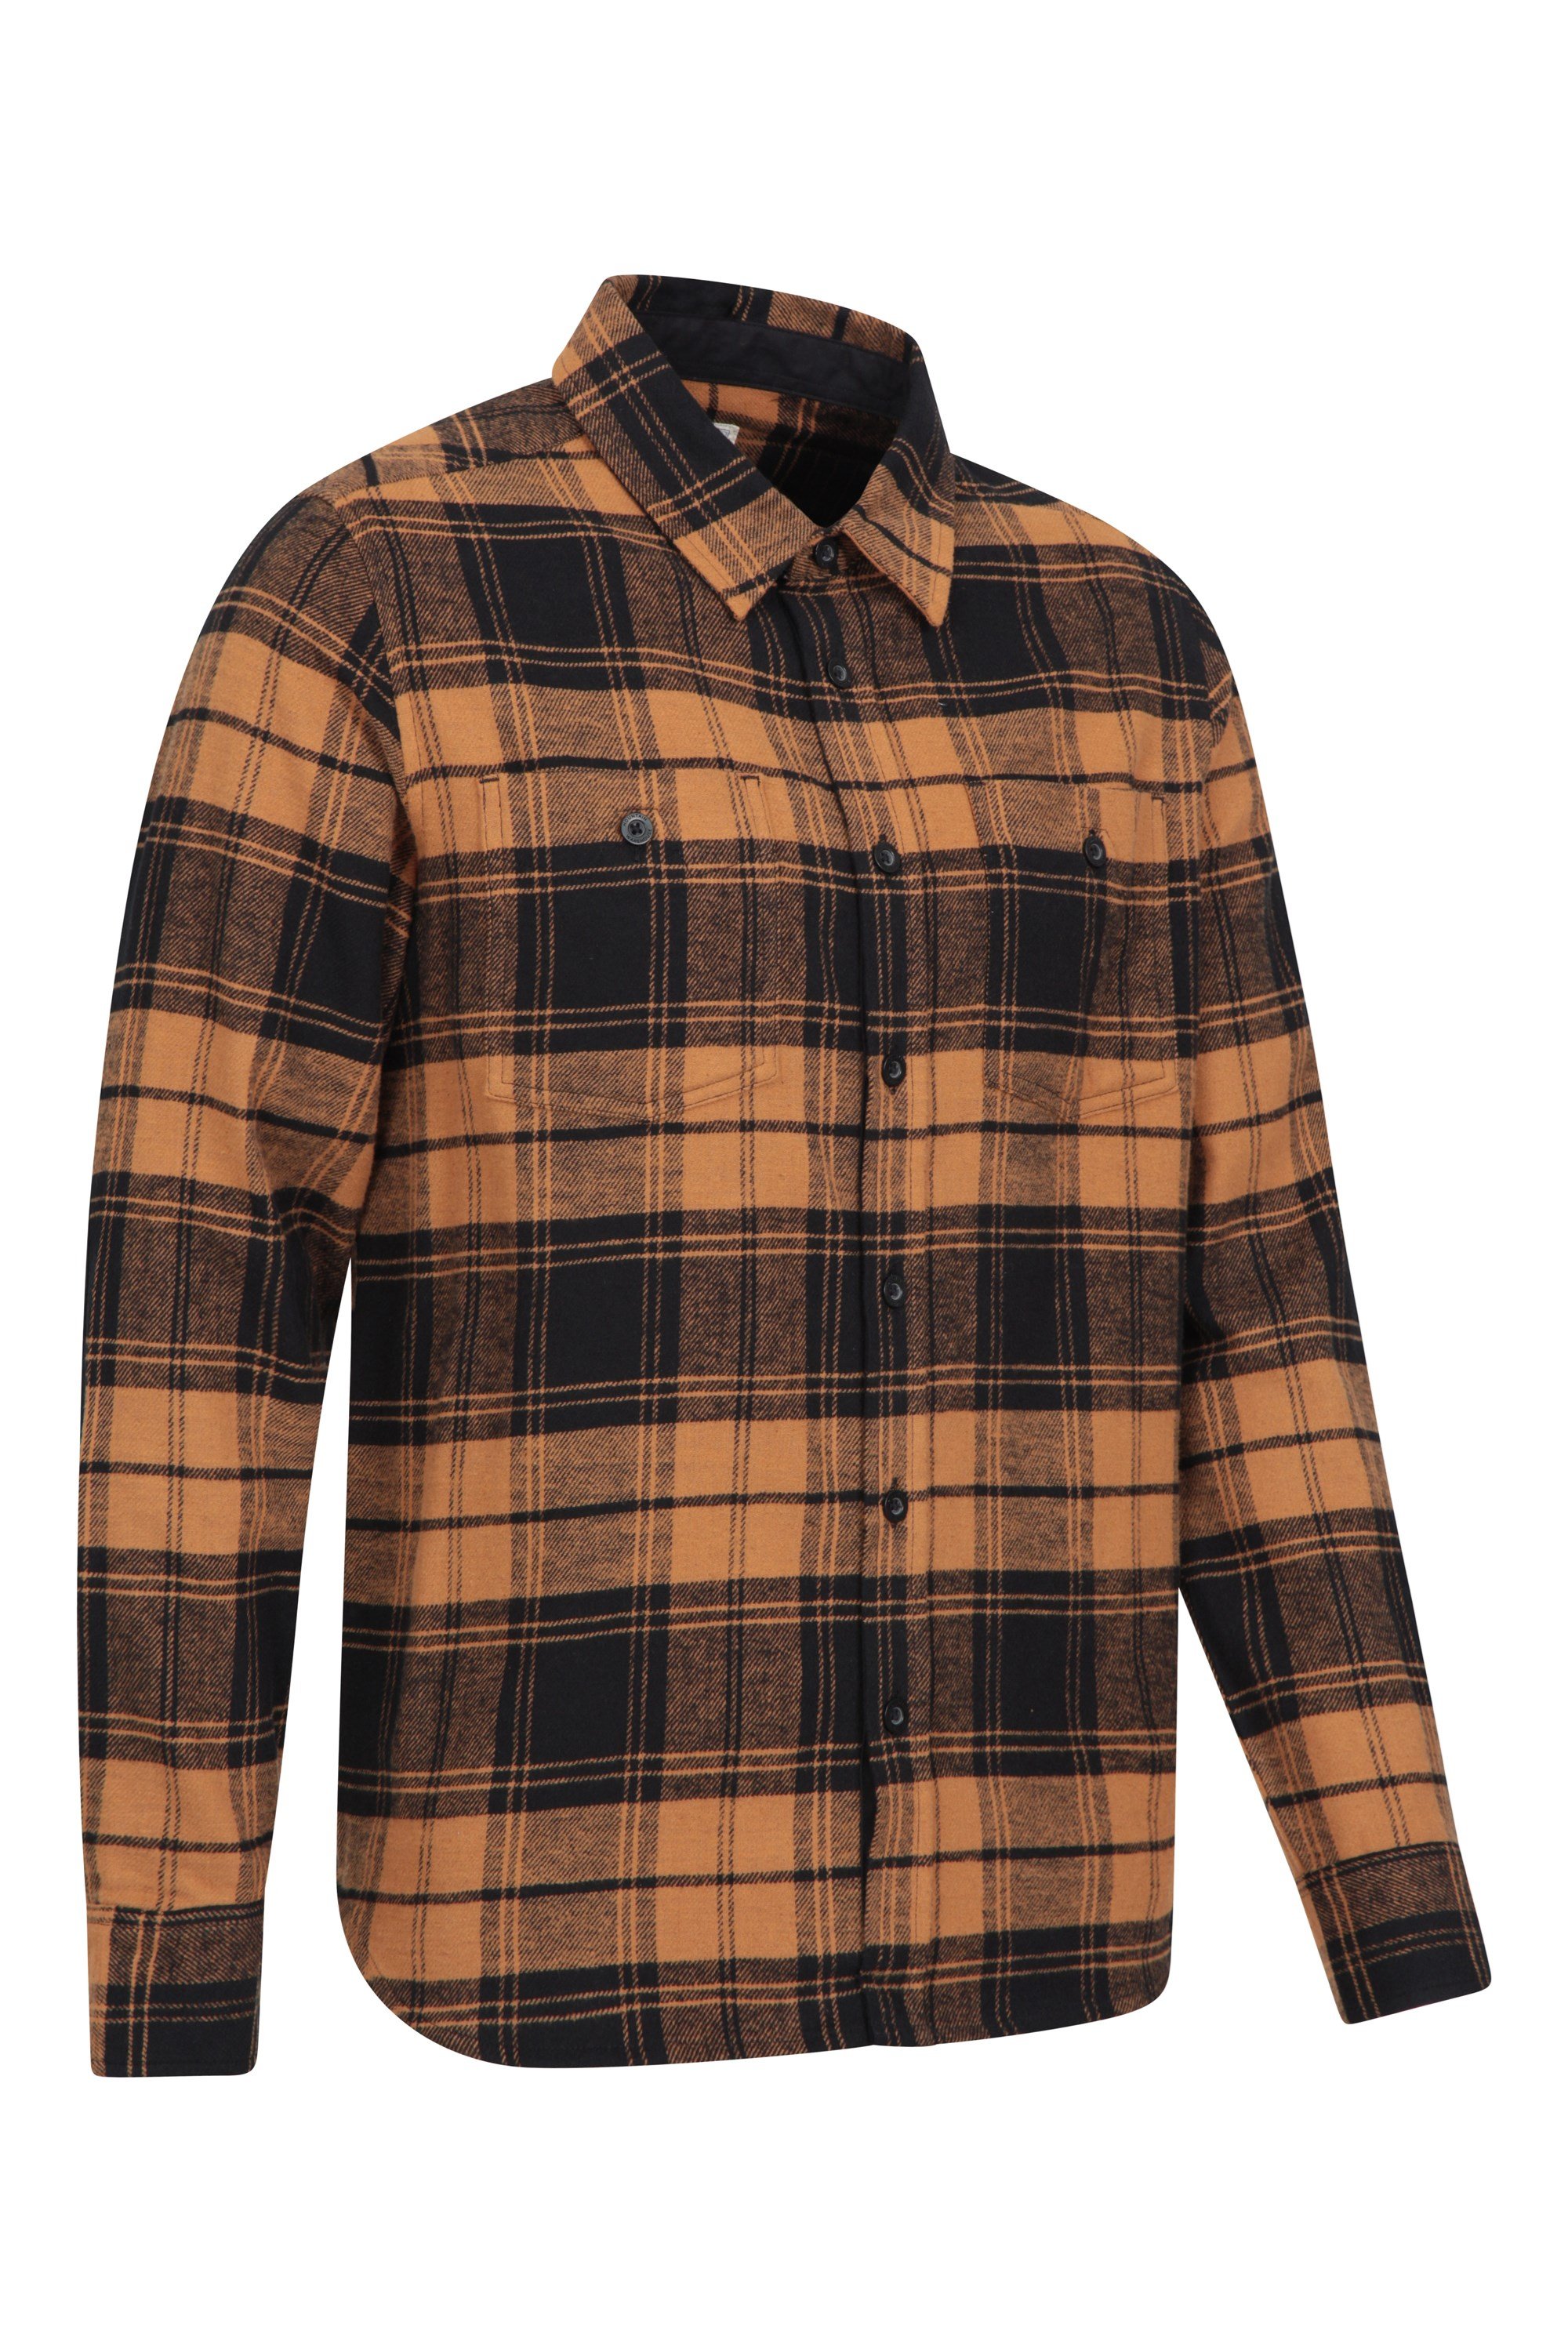 lumberjack shirts uk